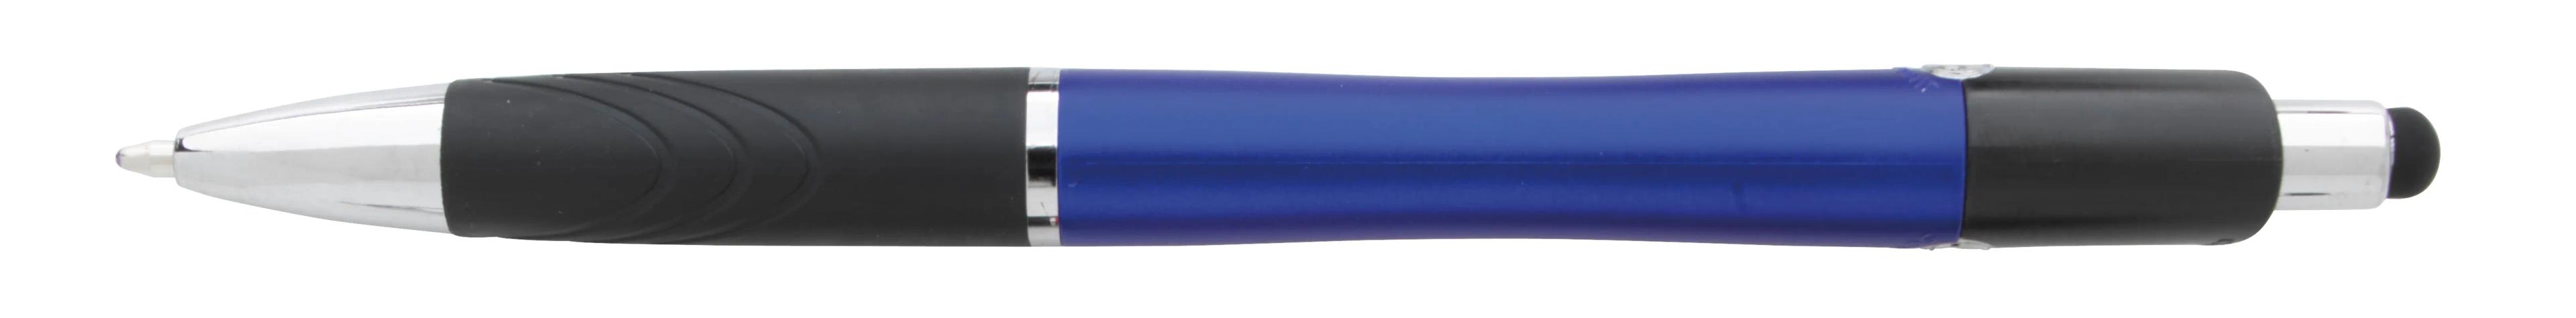 Souvenir® Emblem Stylus Pen 15 of 37